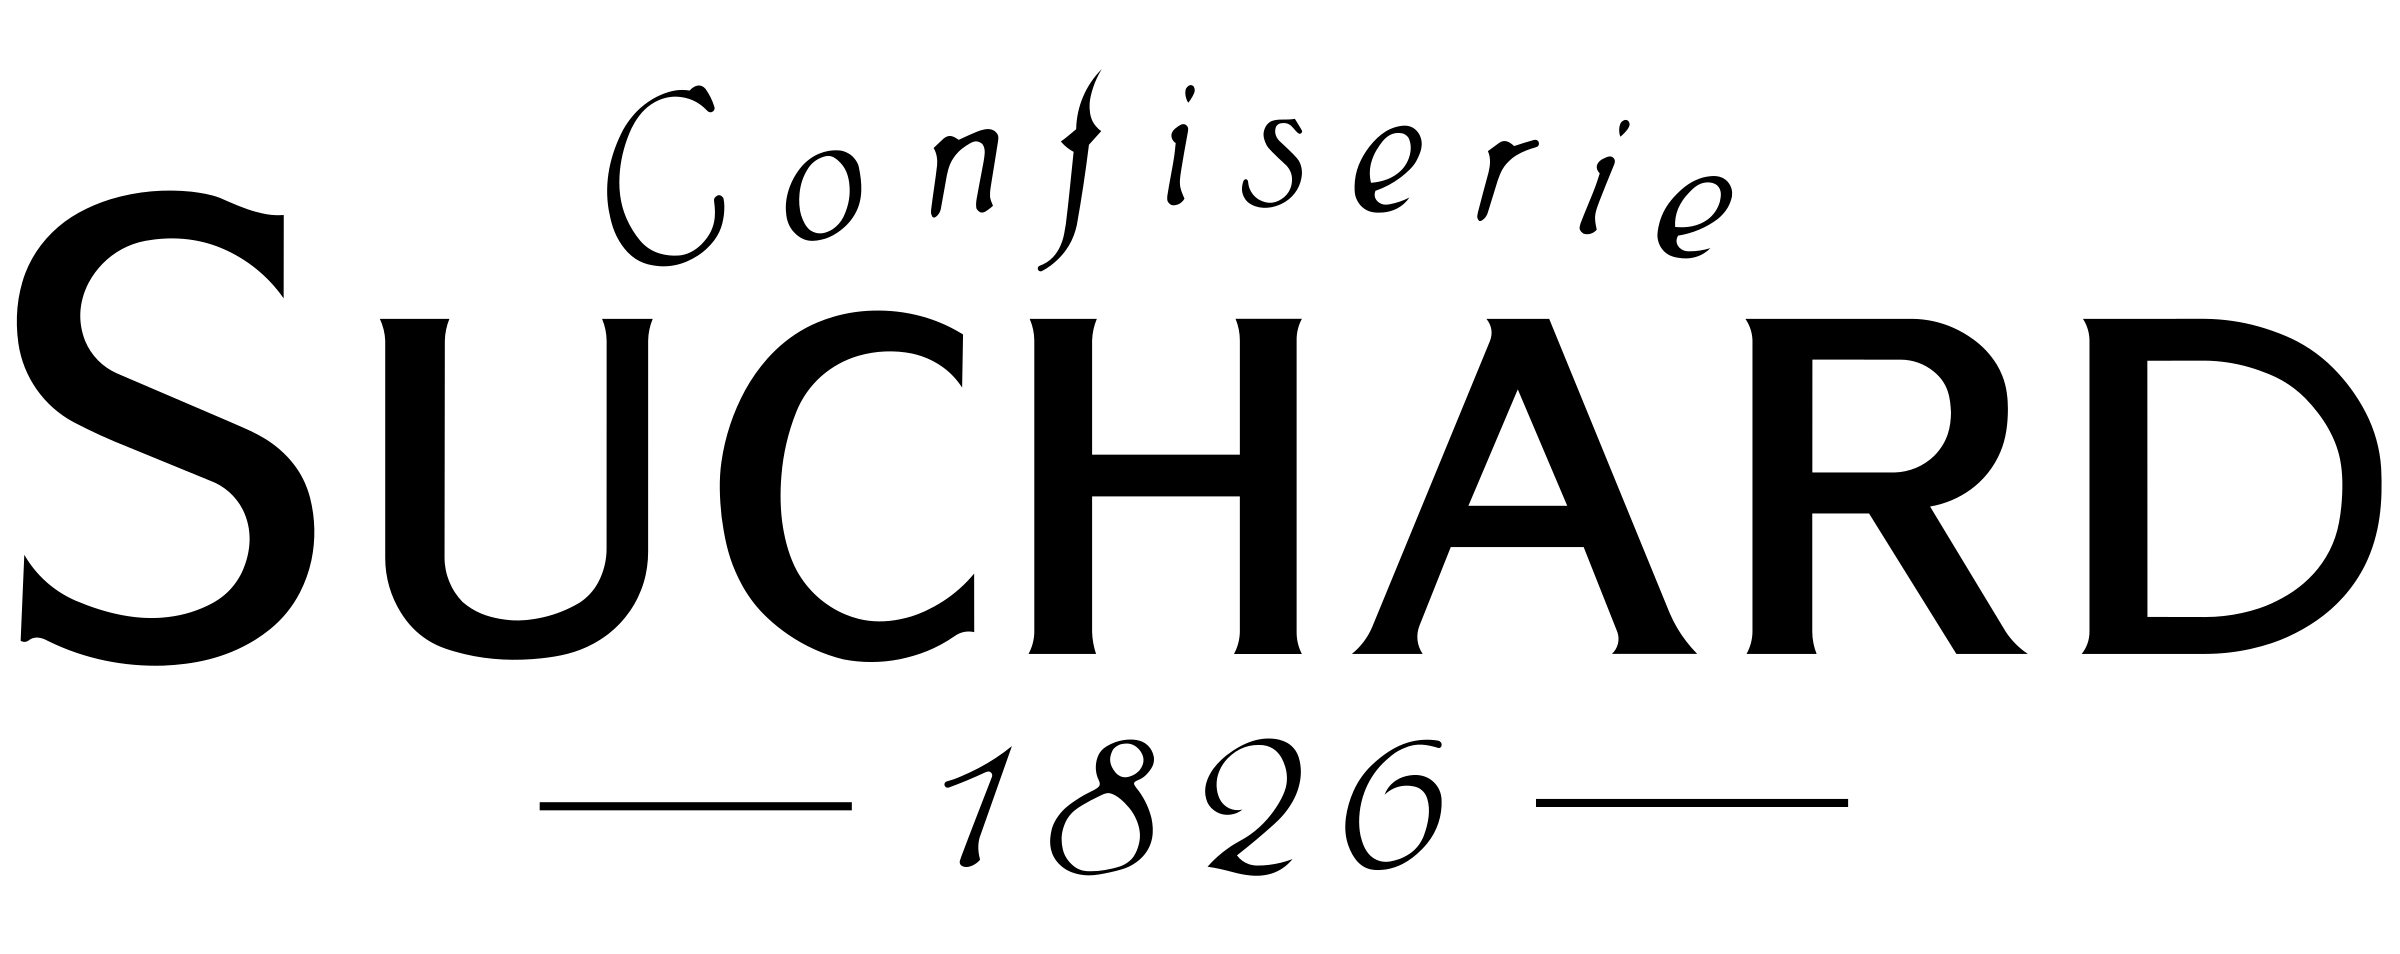 Suchard confiserie logo